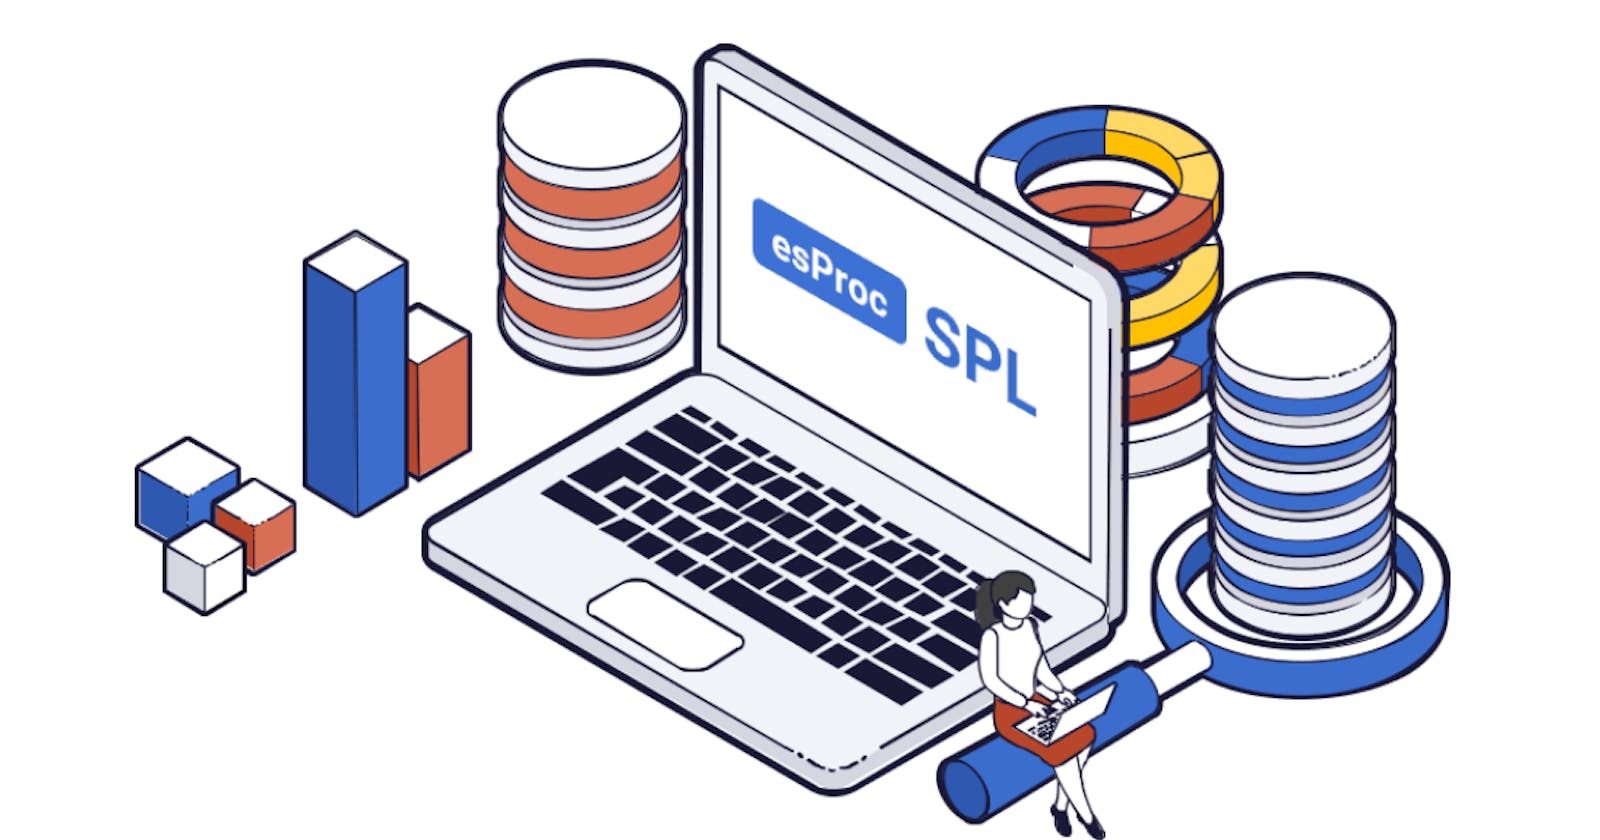 esProc SPL logo